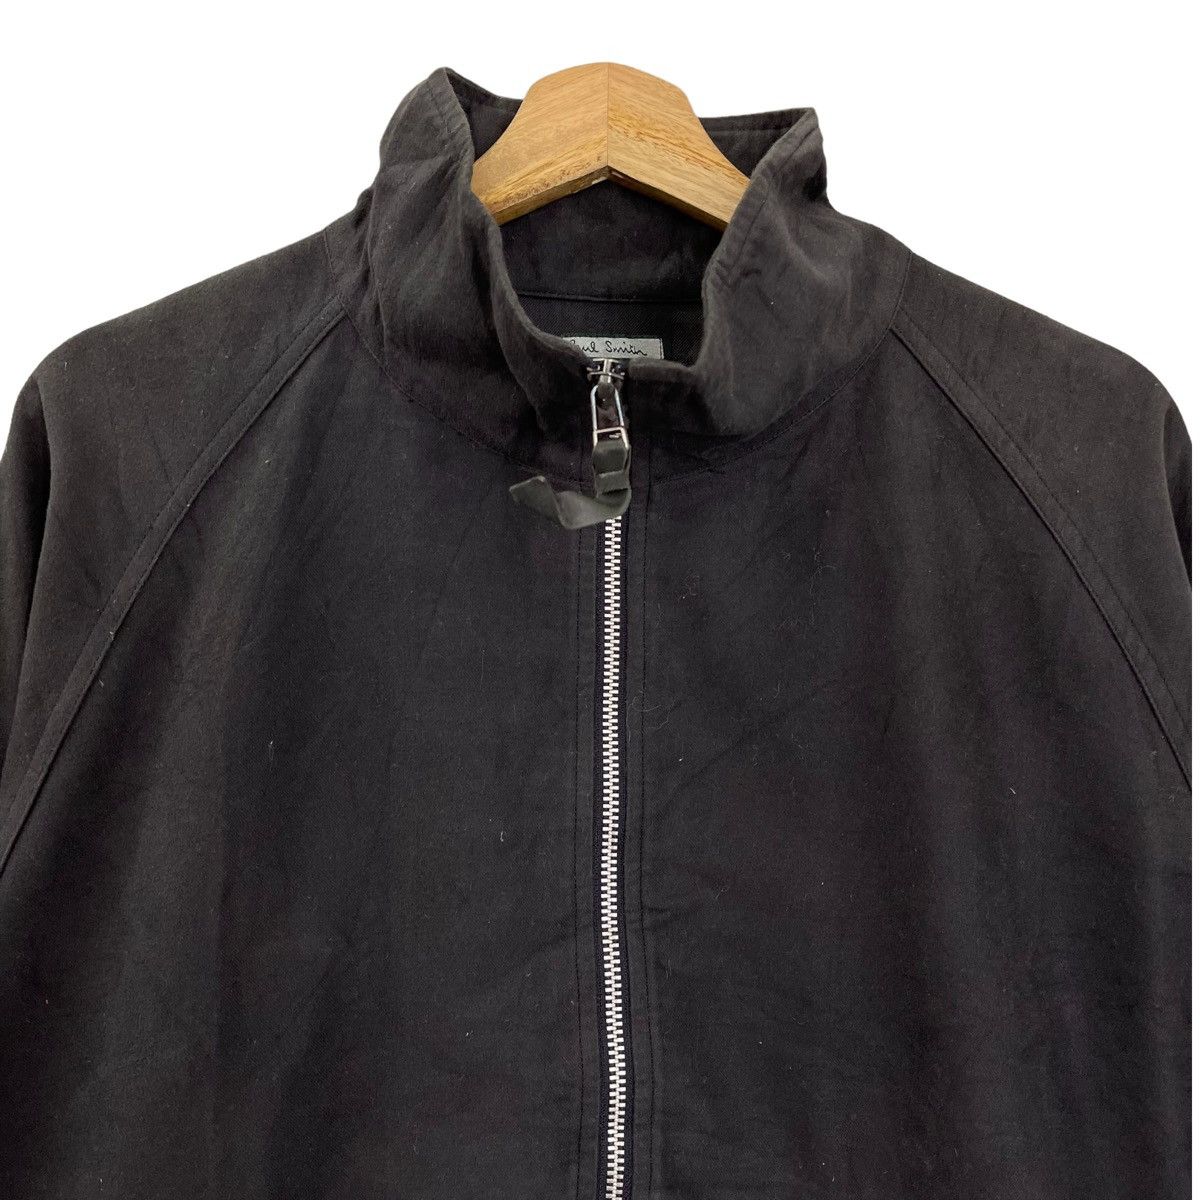 Vintage Paul Smith Halfzip Jacket Size L - 4